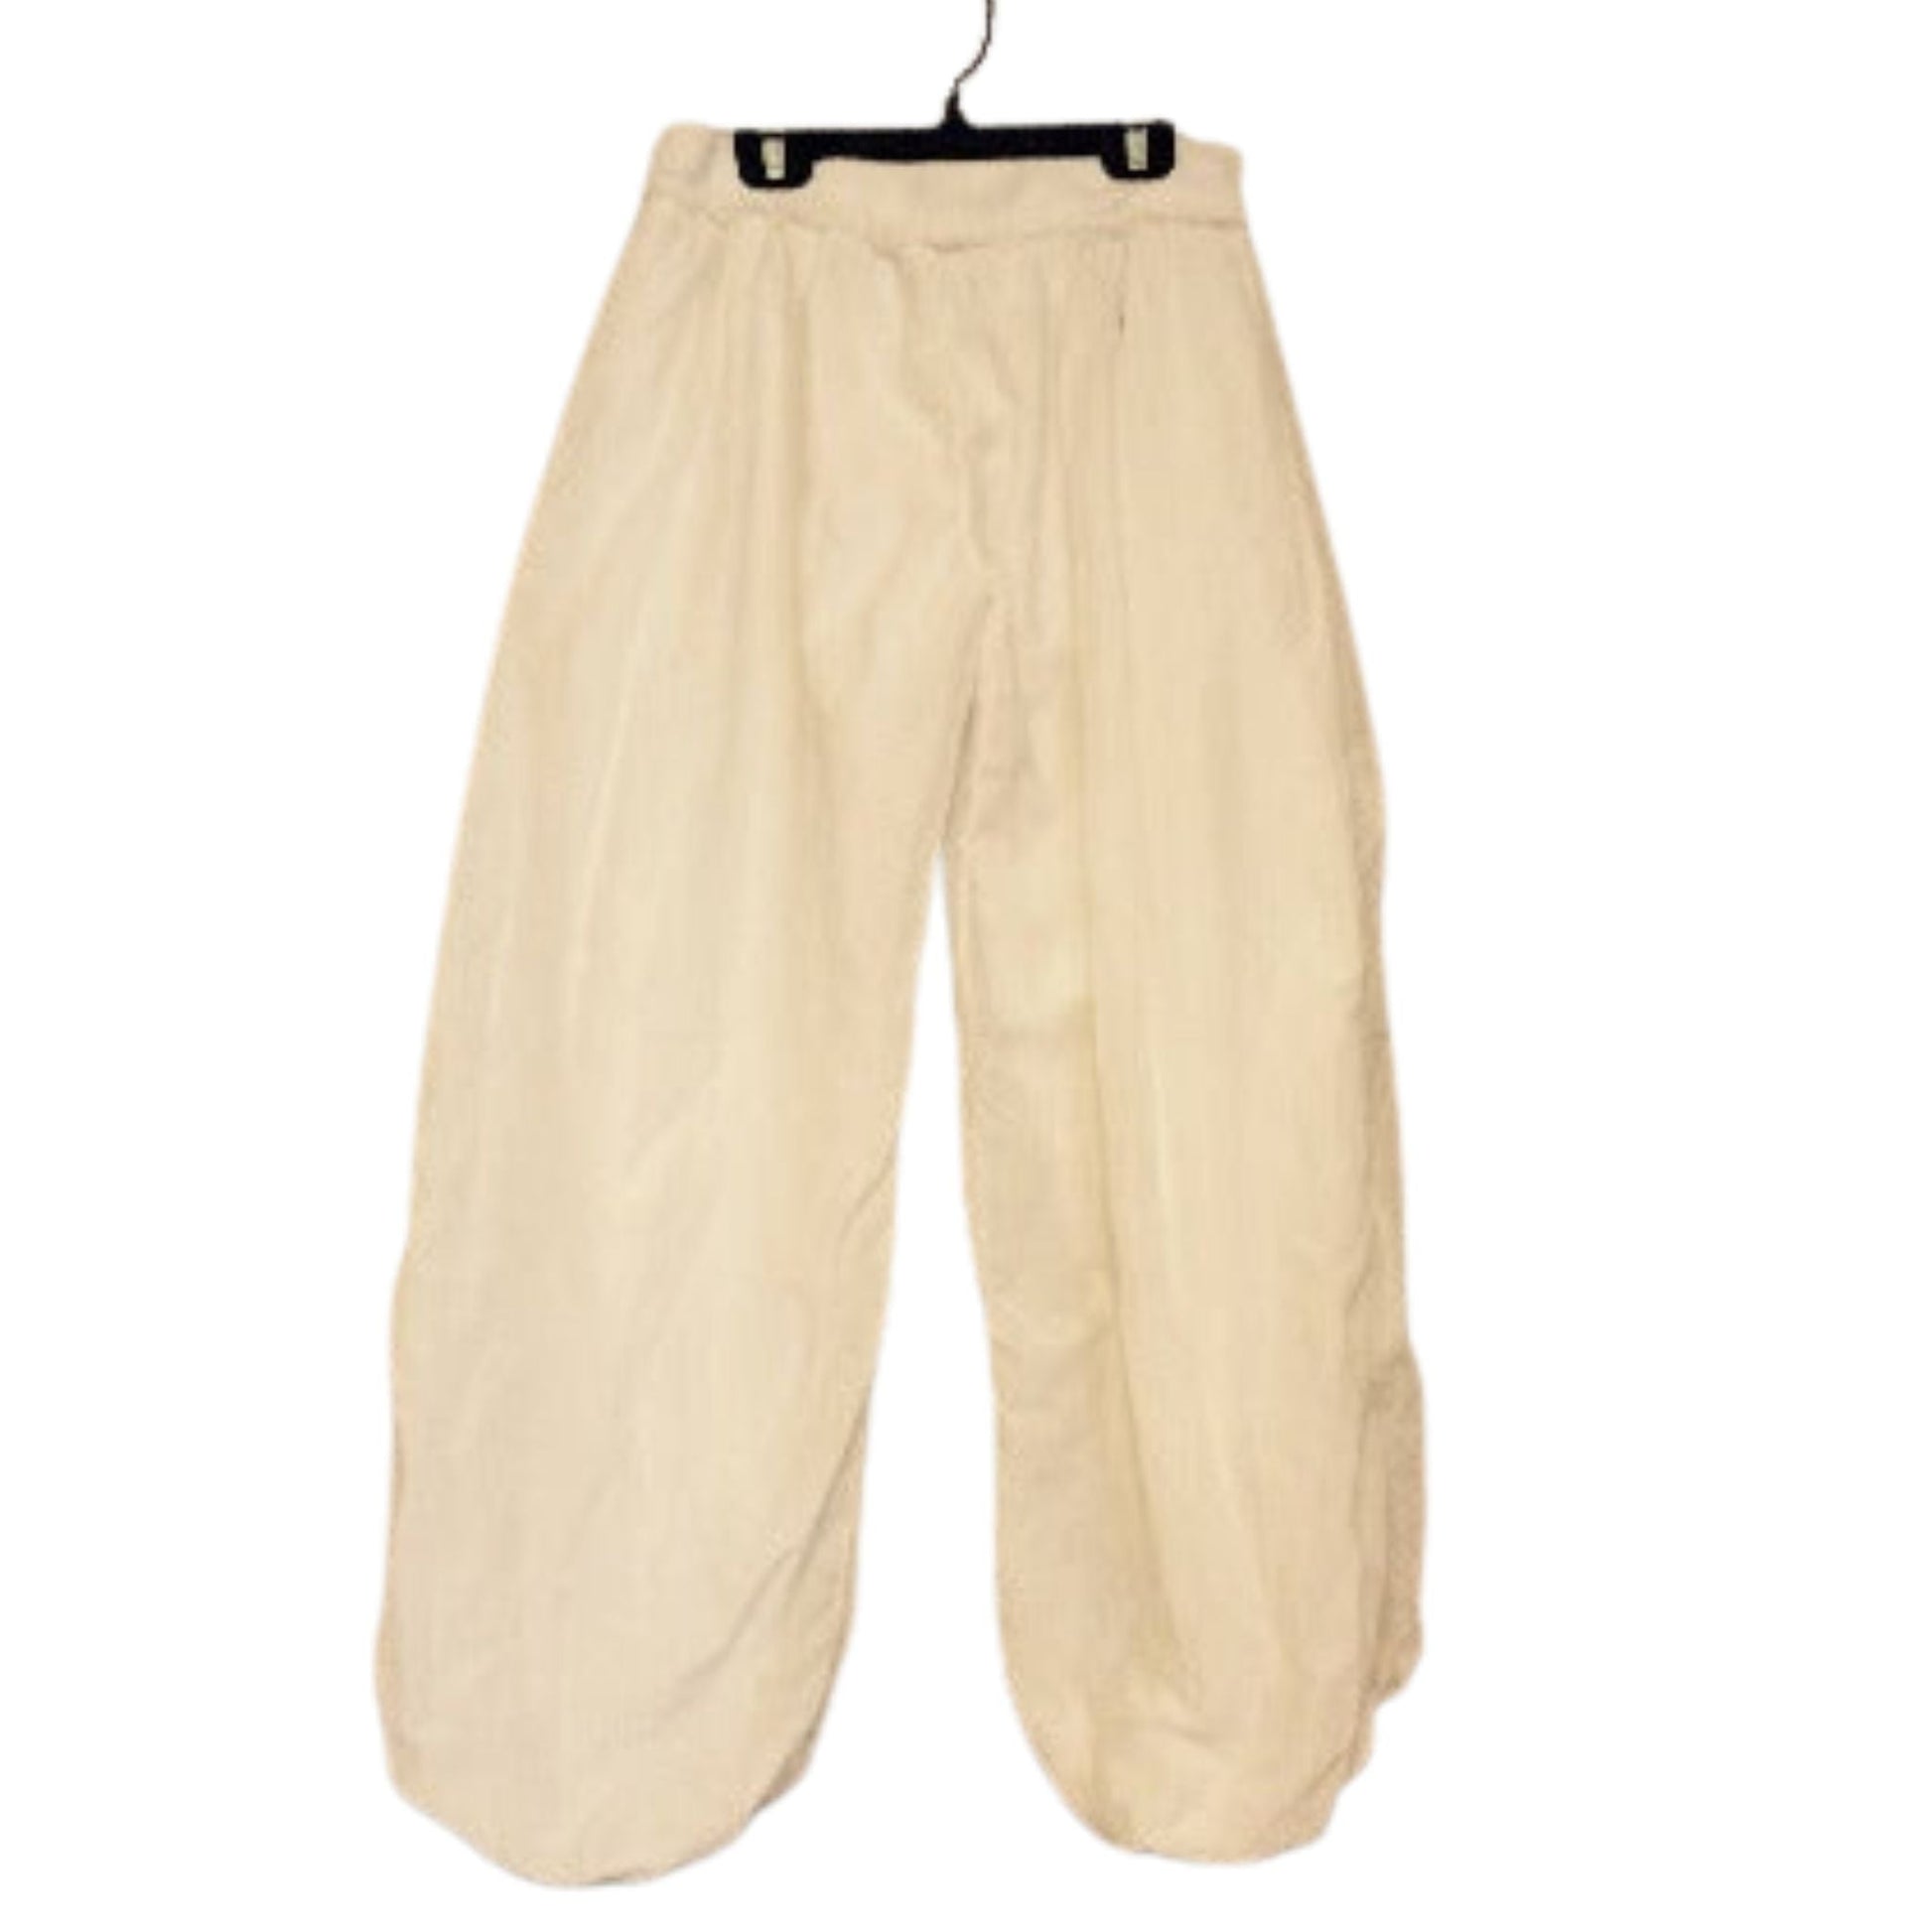 Vintage Genie Pants Small / White / Vintage 1990s